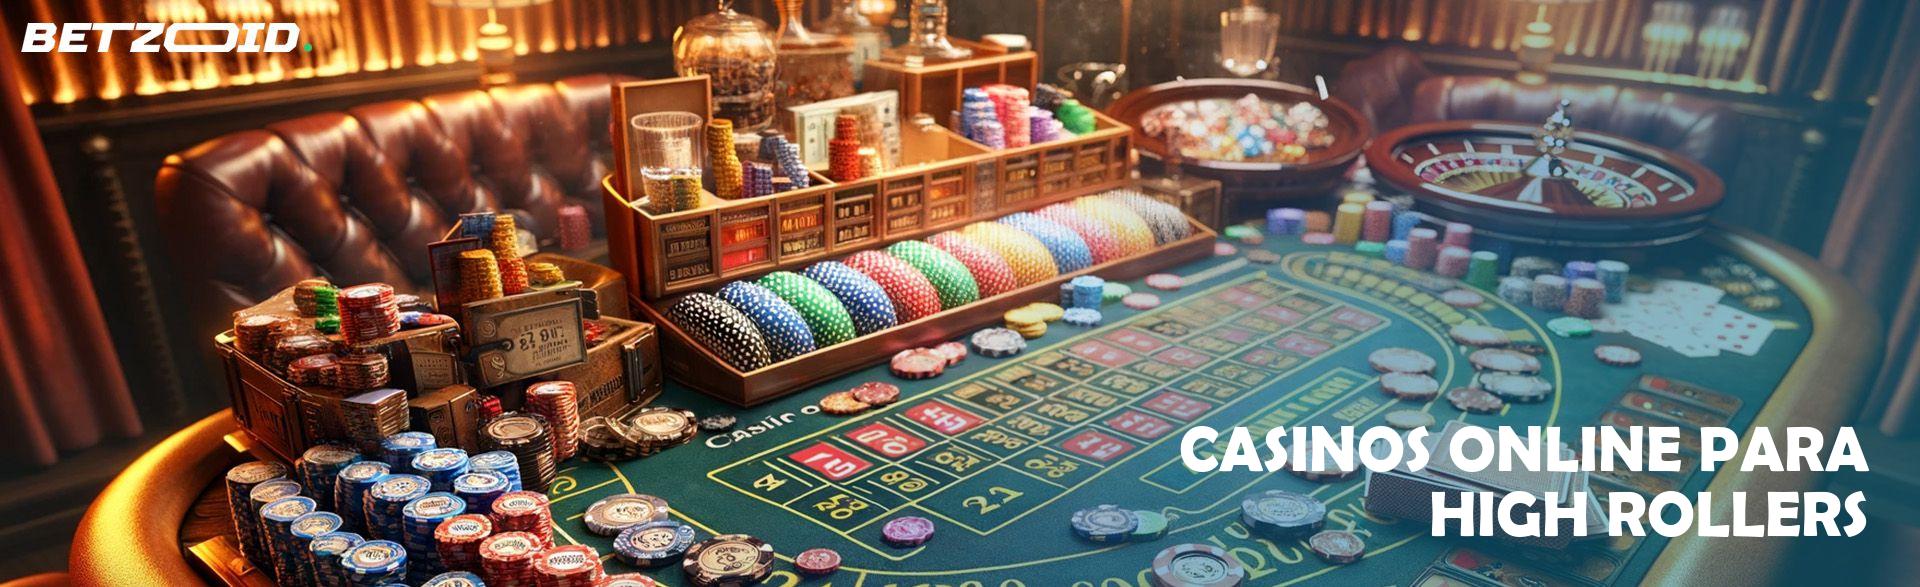 Casinos Online Para High Rollers.